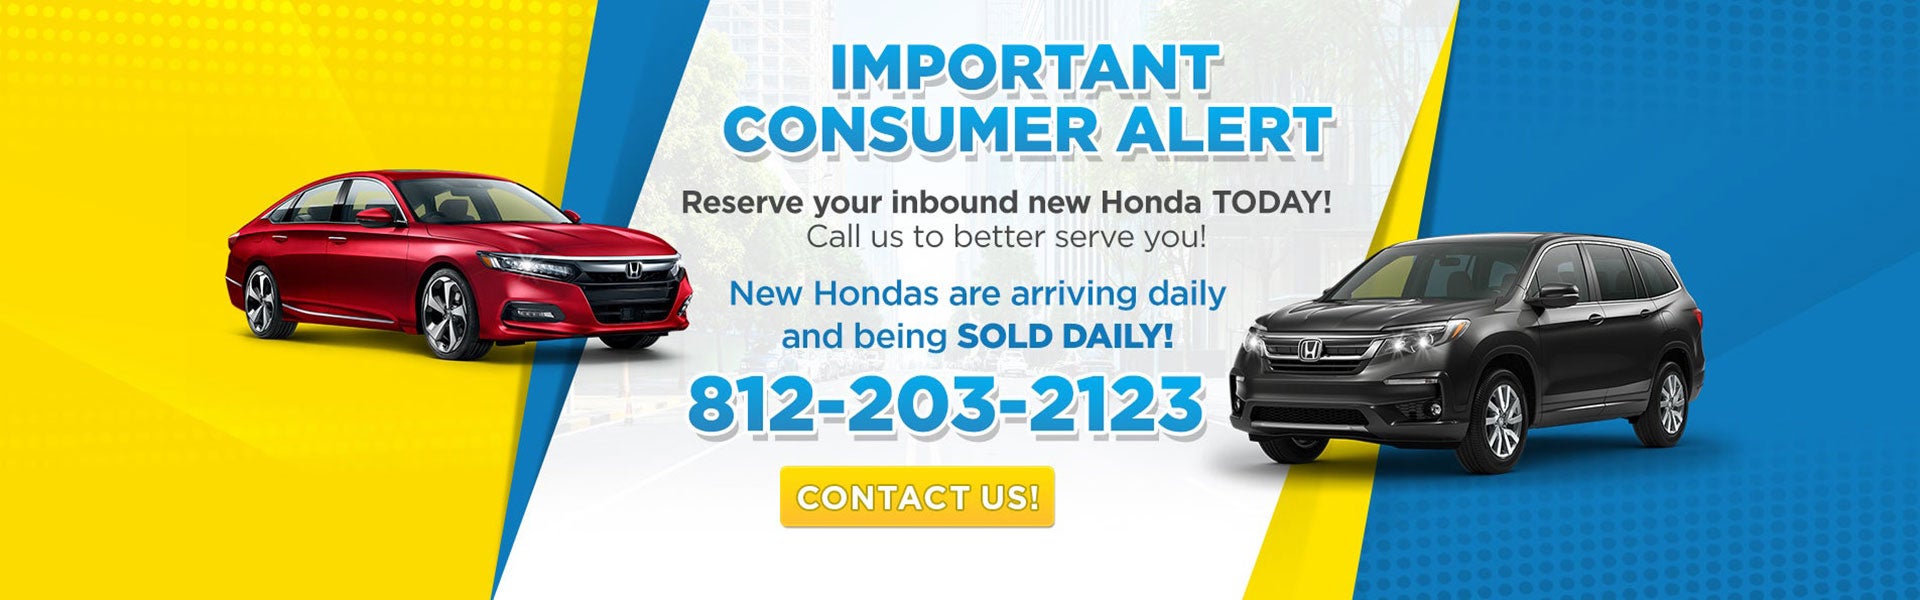 New Hondas Arriving Daily! 